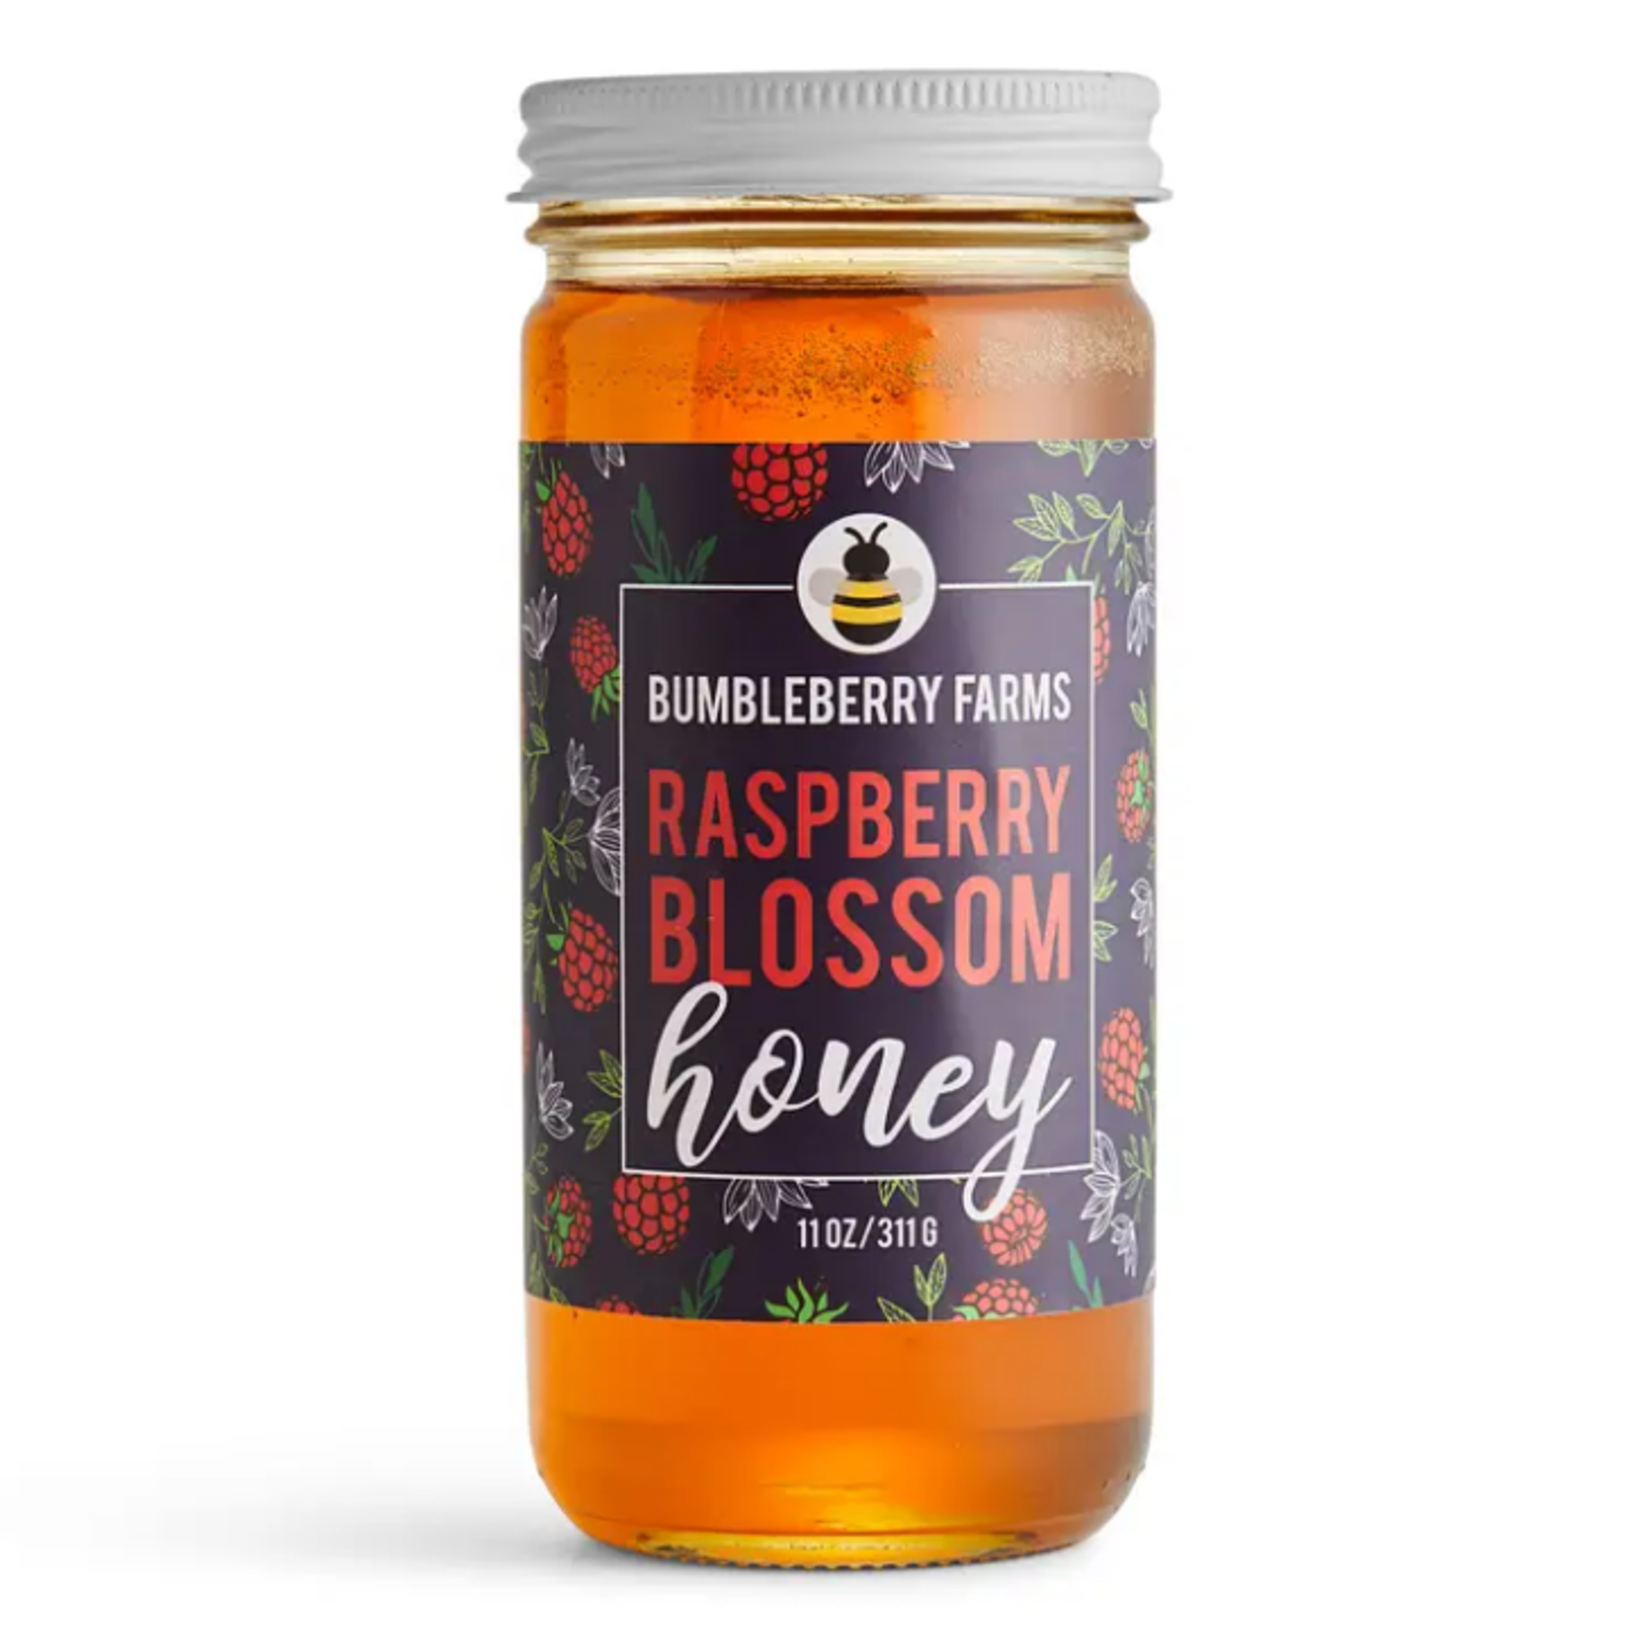 Bumbleberry Farms Raspberry Blossom Honey